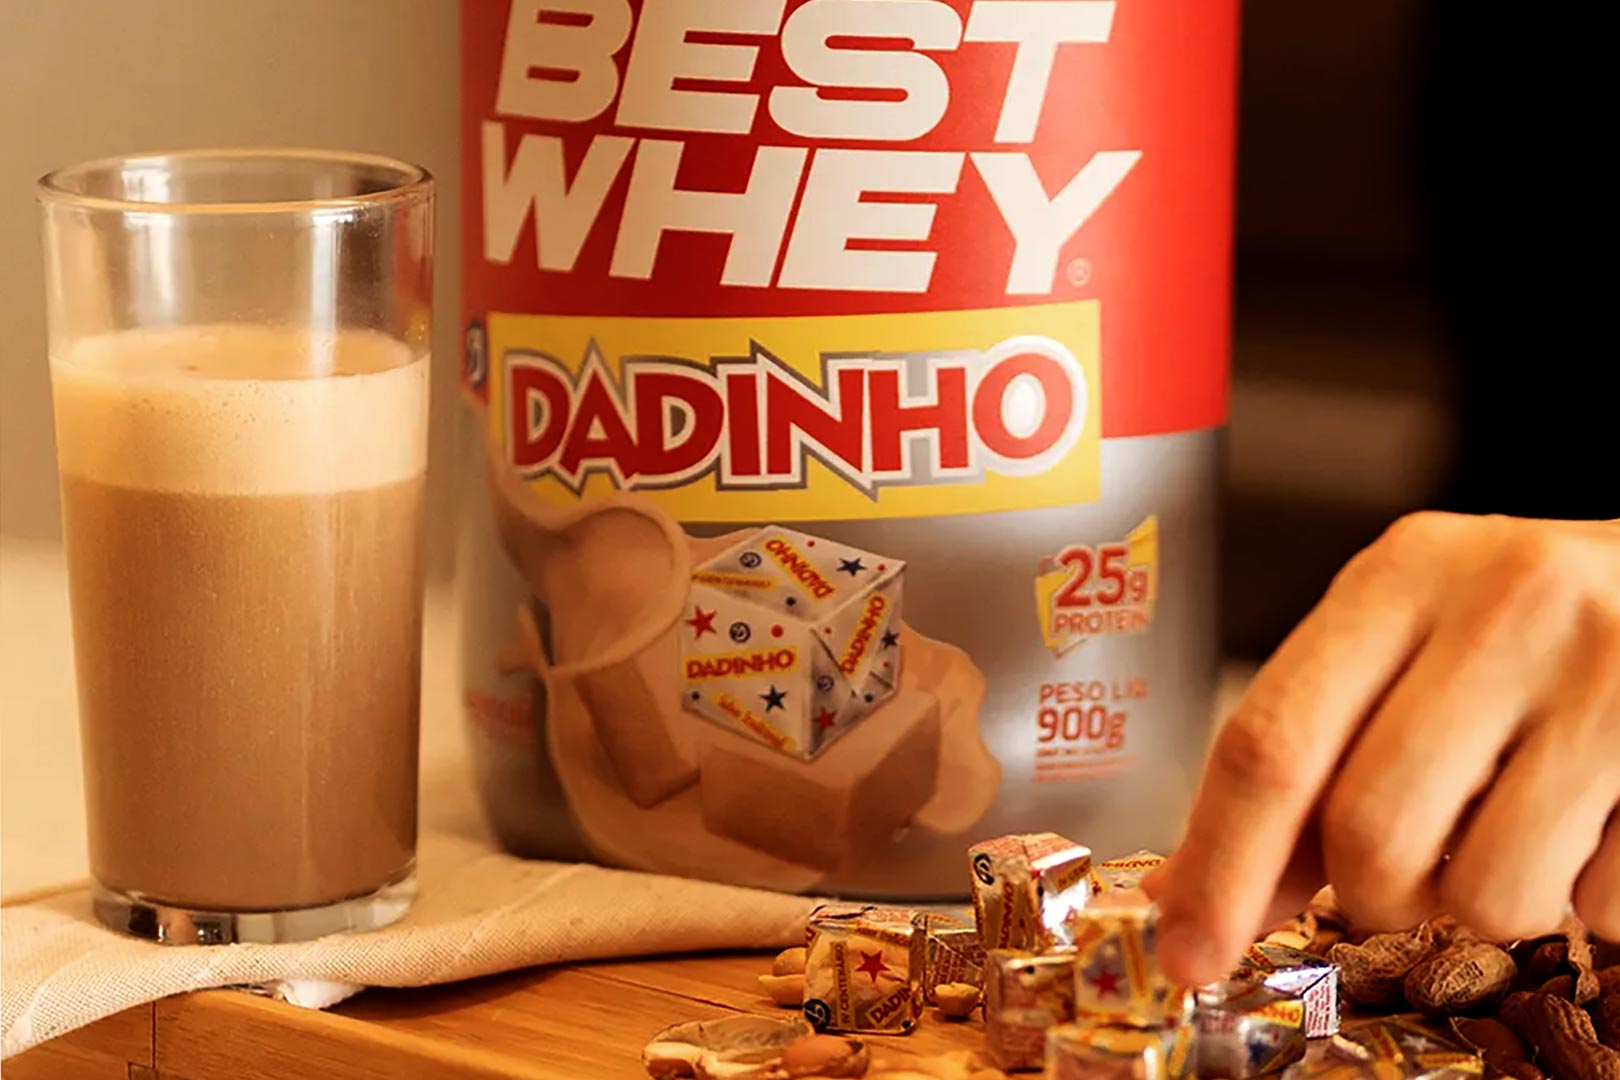 Dadinho Peanut Candy Best Whey Protein Powder